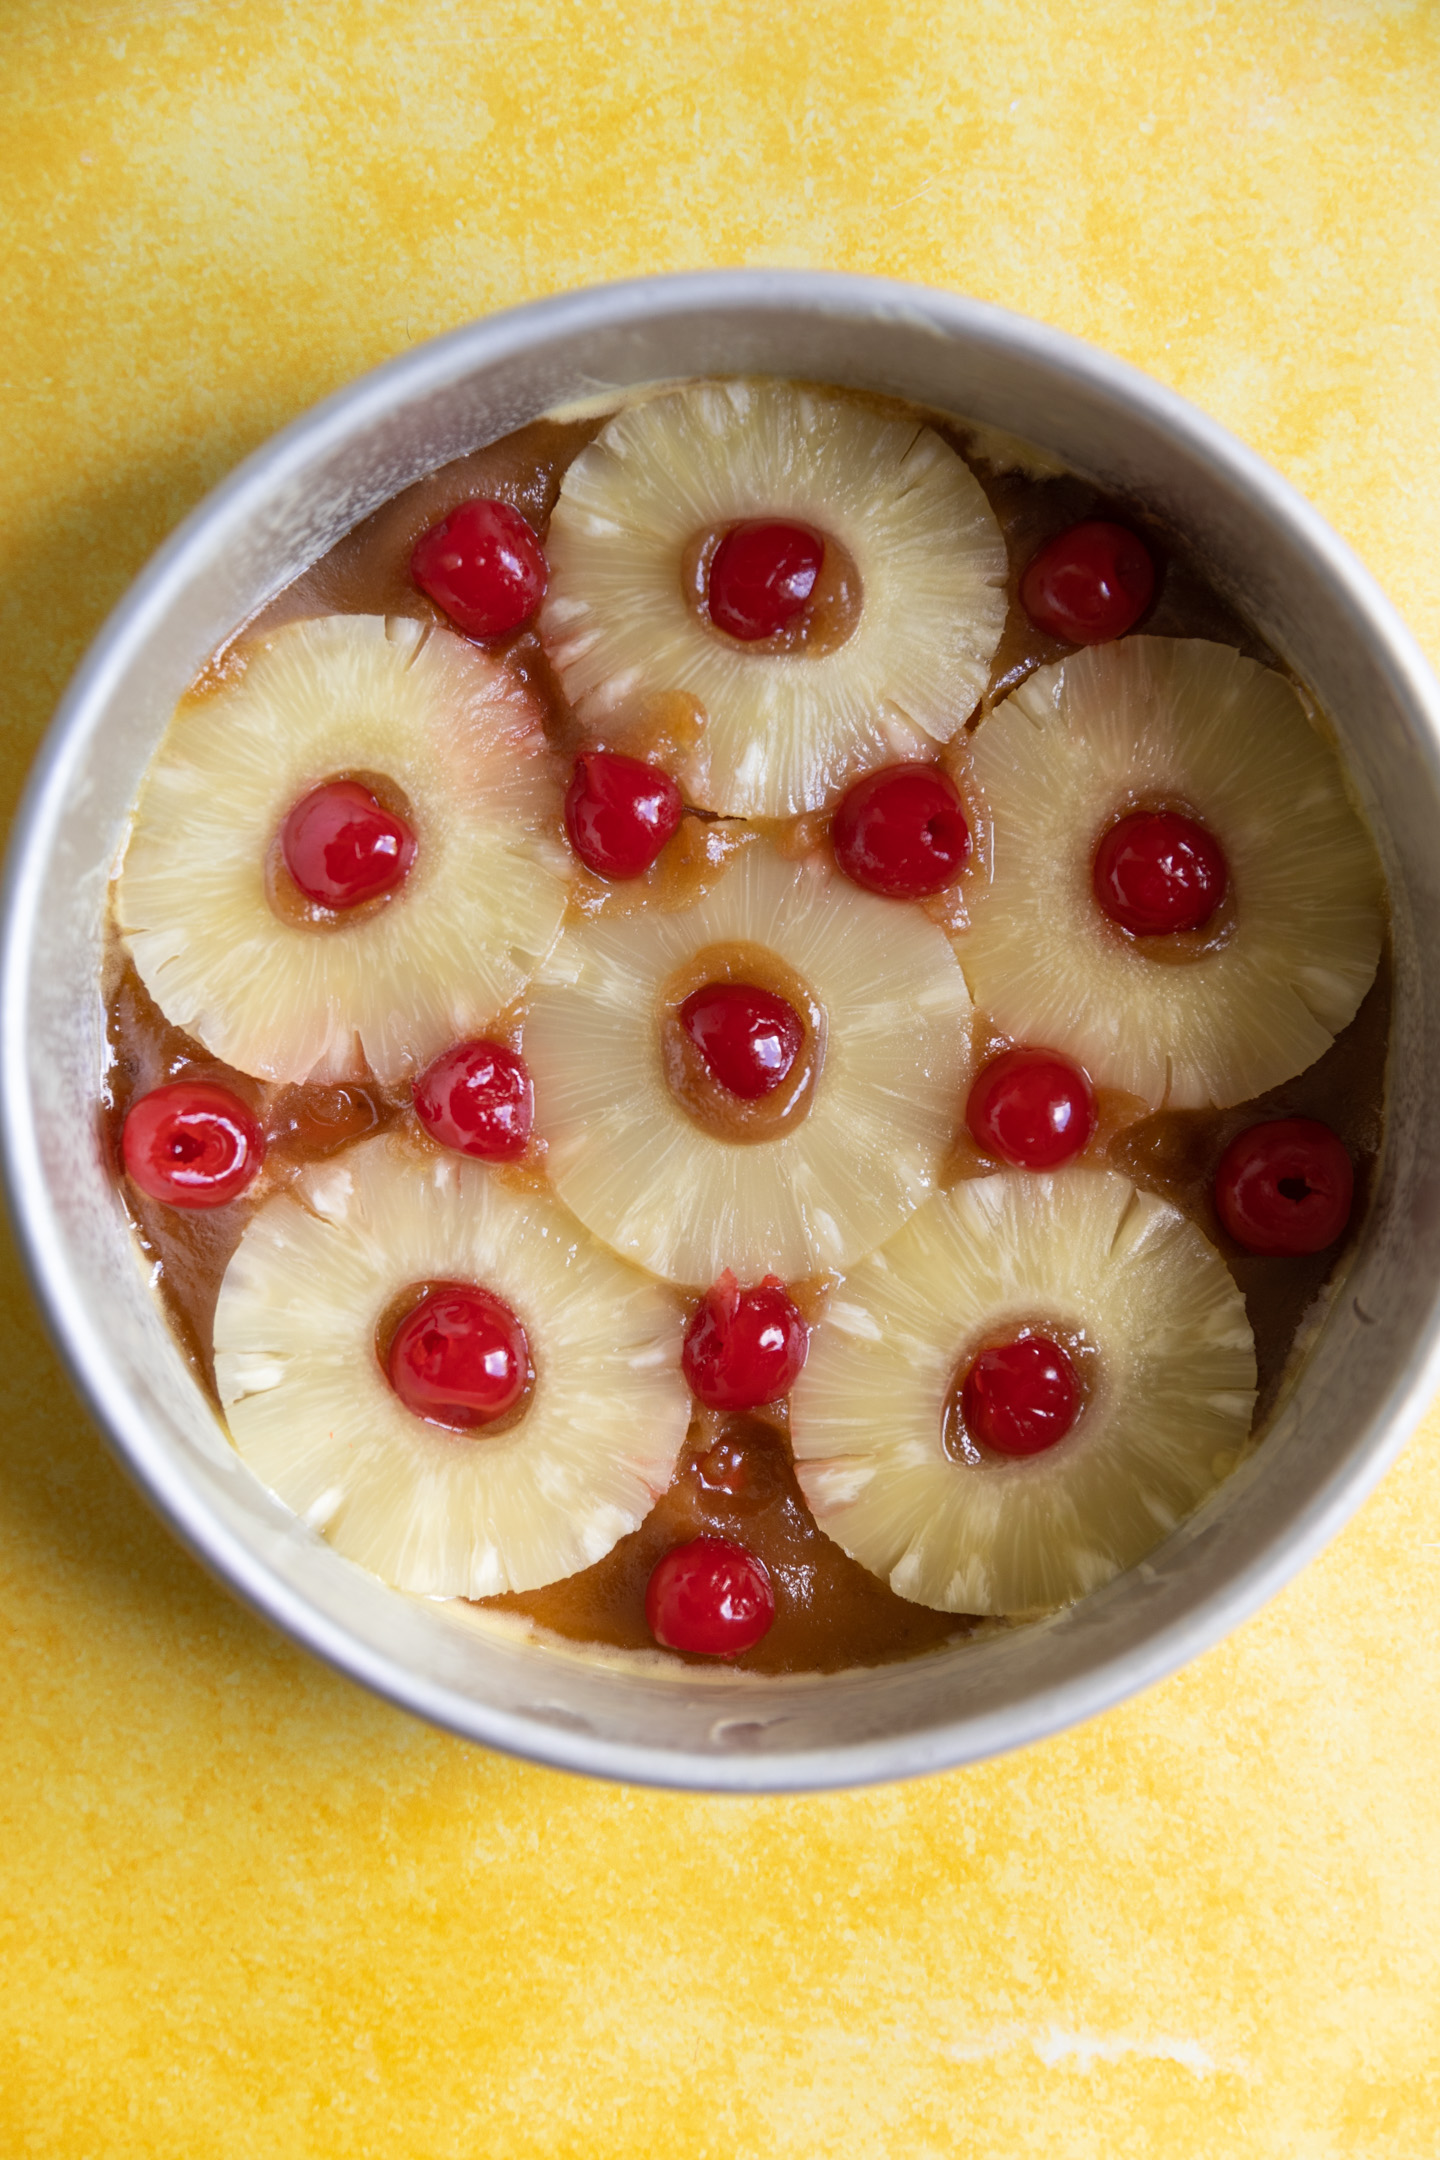 Pineapple rings and maraschino cherries in a cake pan.